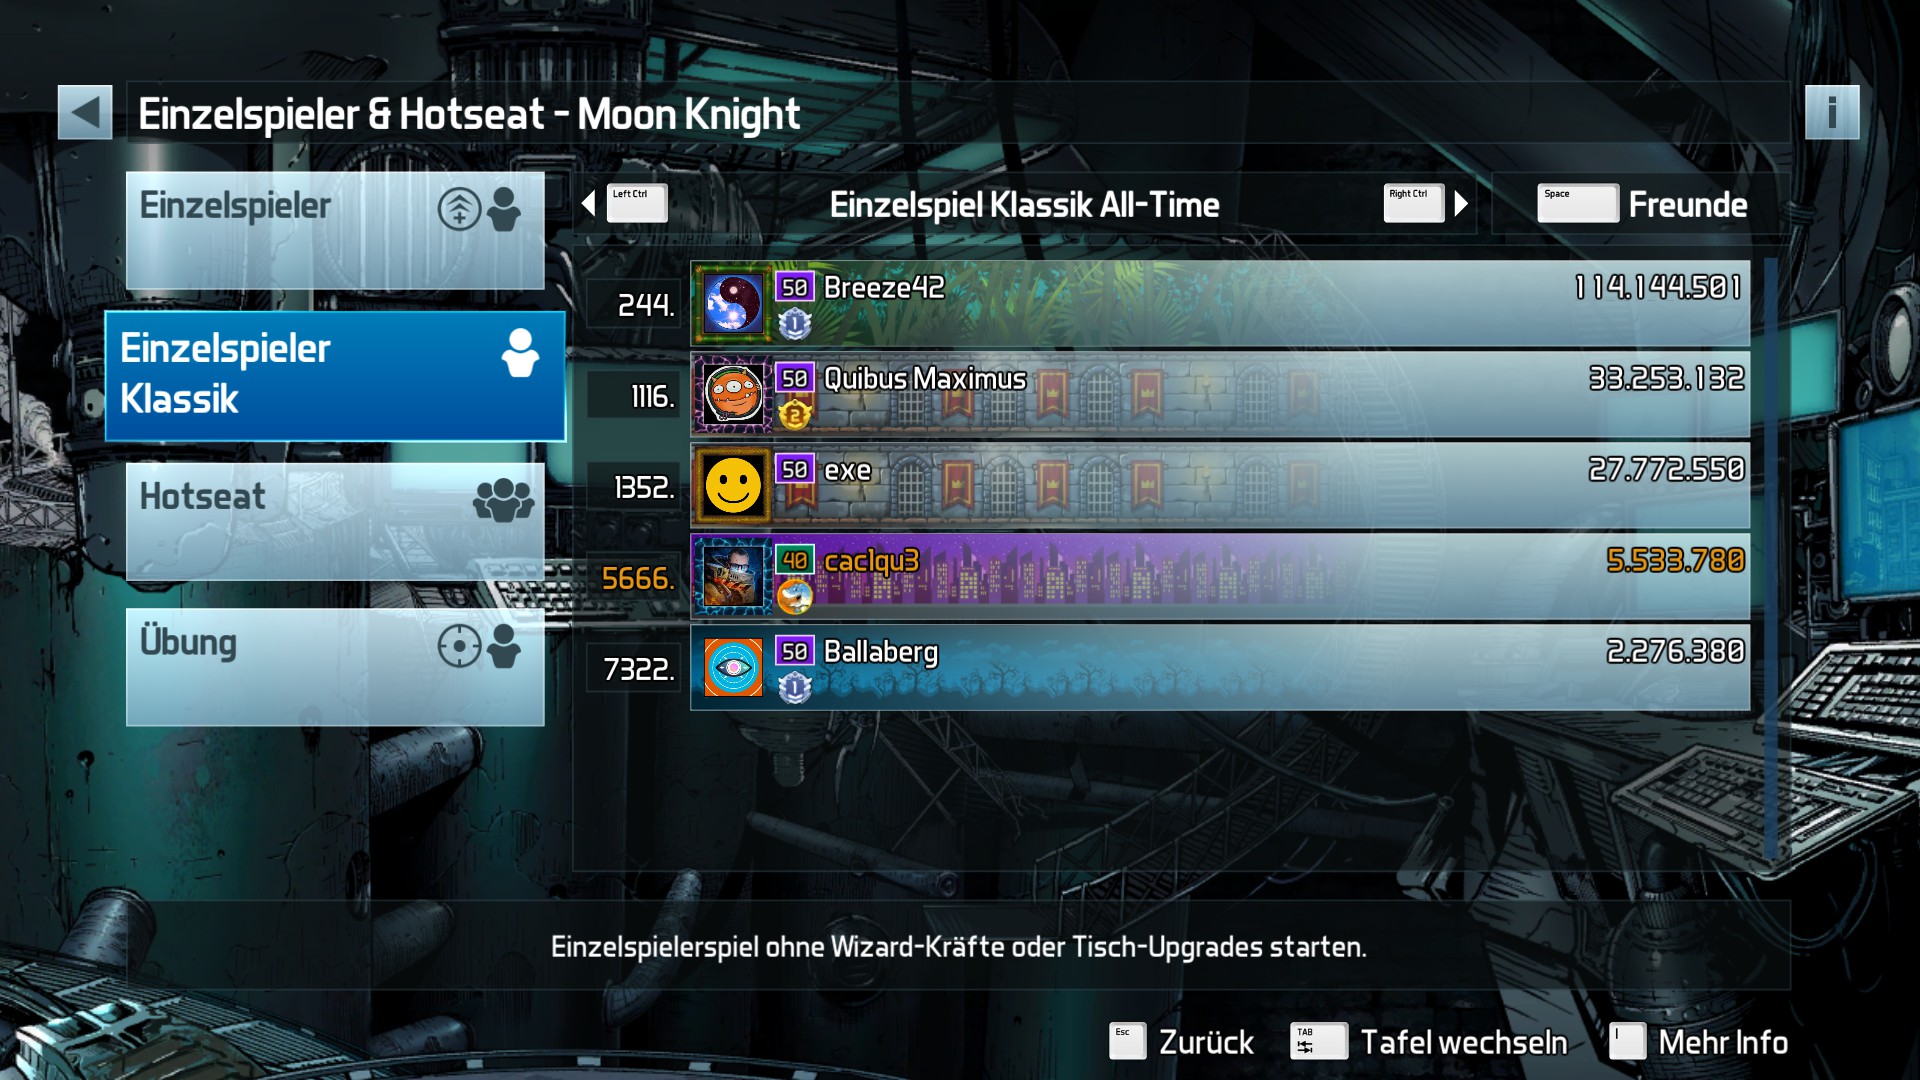 Pinball FX3: Moon Knight [Classic] 5,533,780 points